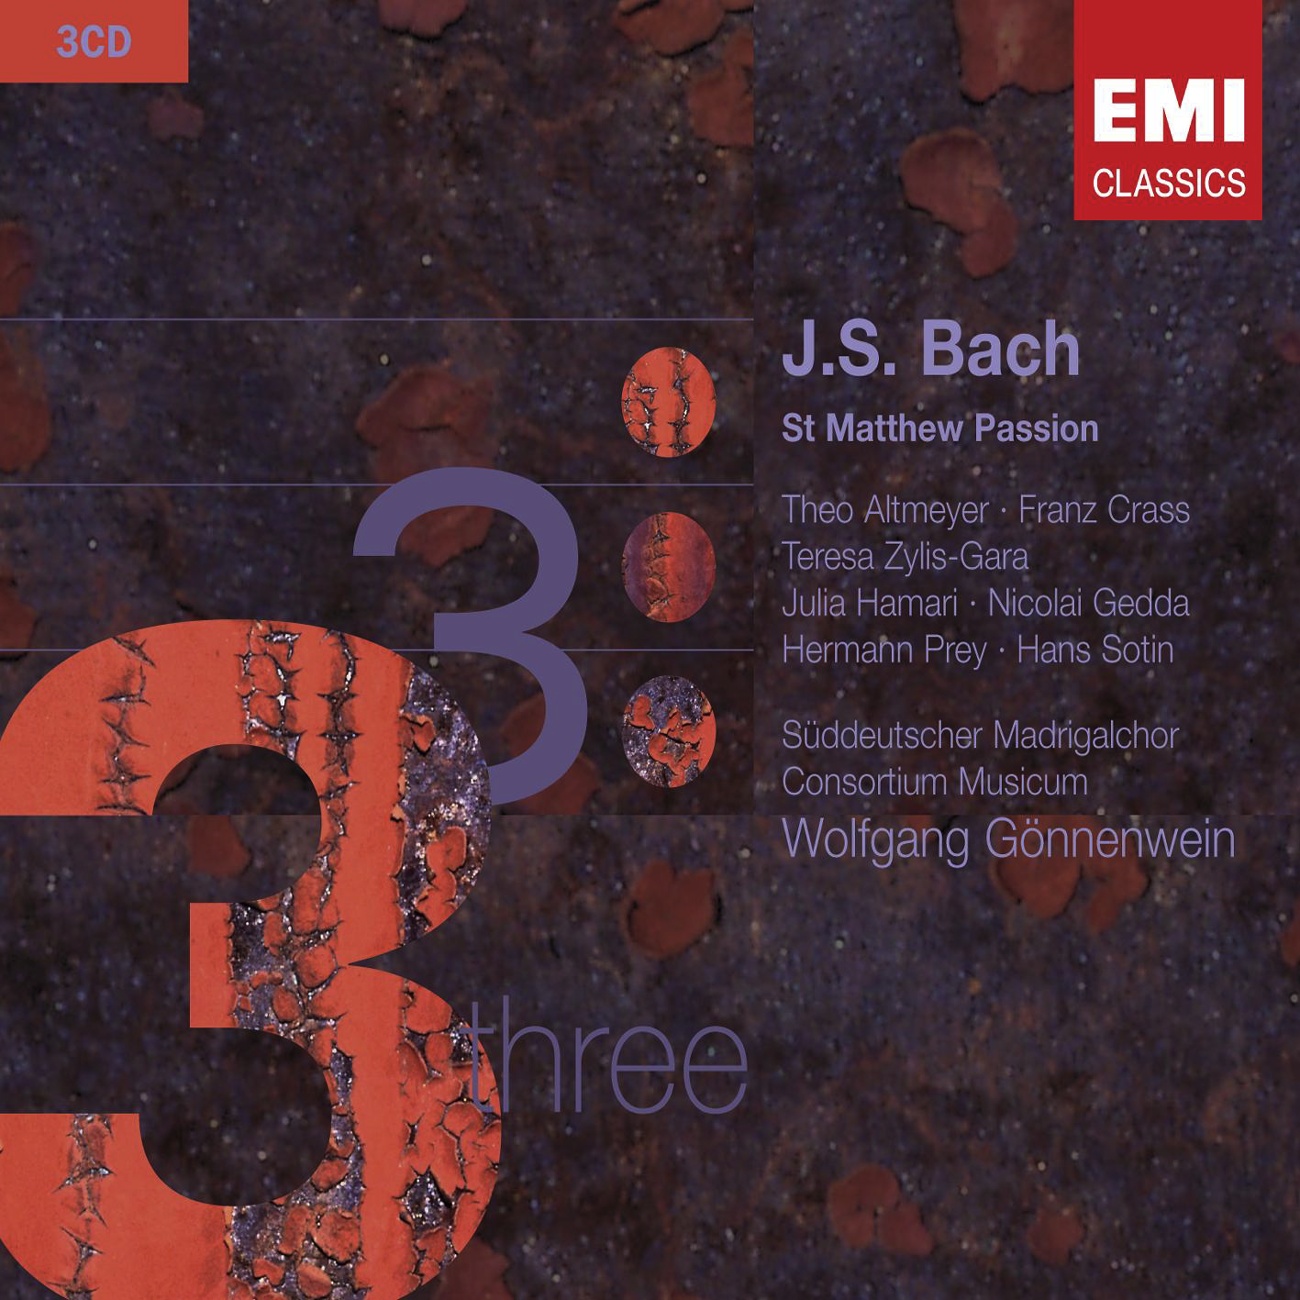 Matth usPassion BWV 244  Oratorium in 2 Teilen 1989 Digital Remaster, 1. Teil: Nr. 35  Choral: O Mensch, Bewein' Dein Sü nde Gro Chor I  II  Orchester I  II  Tutti